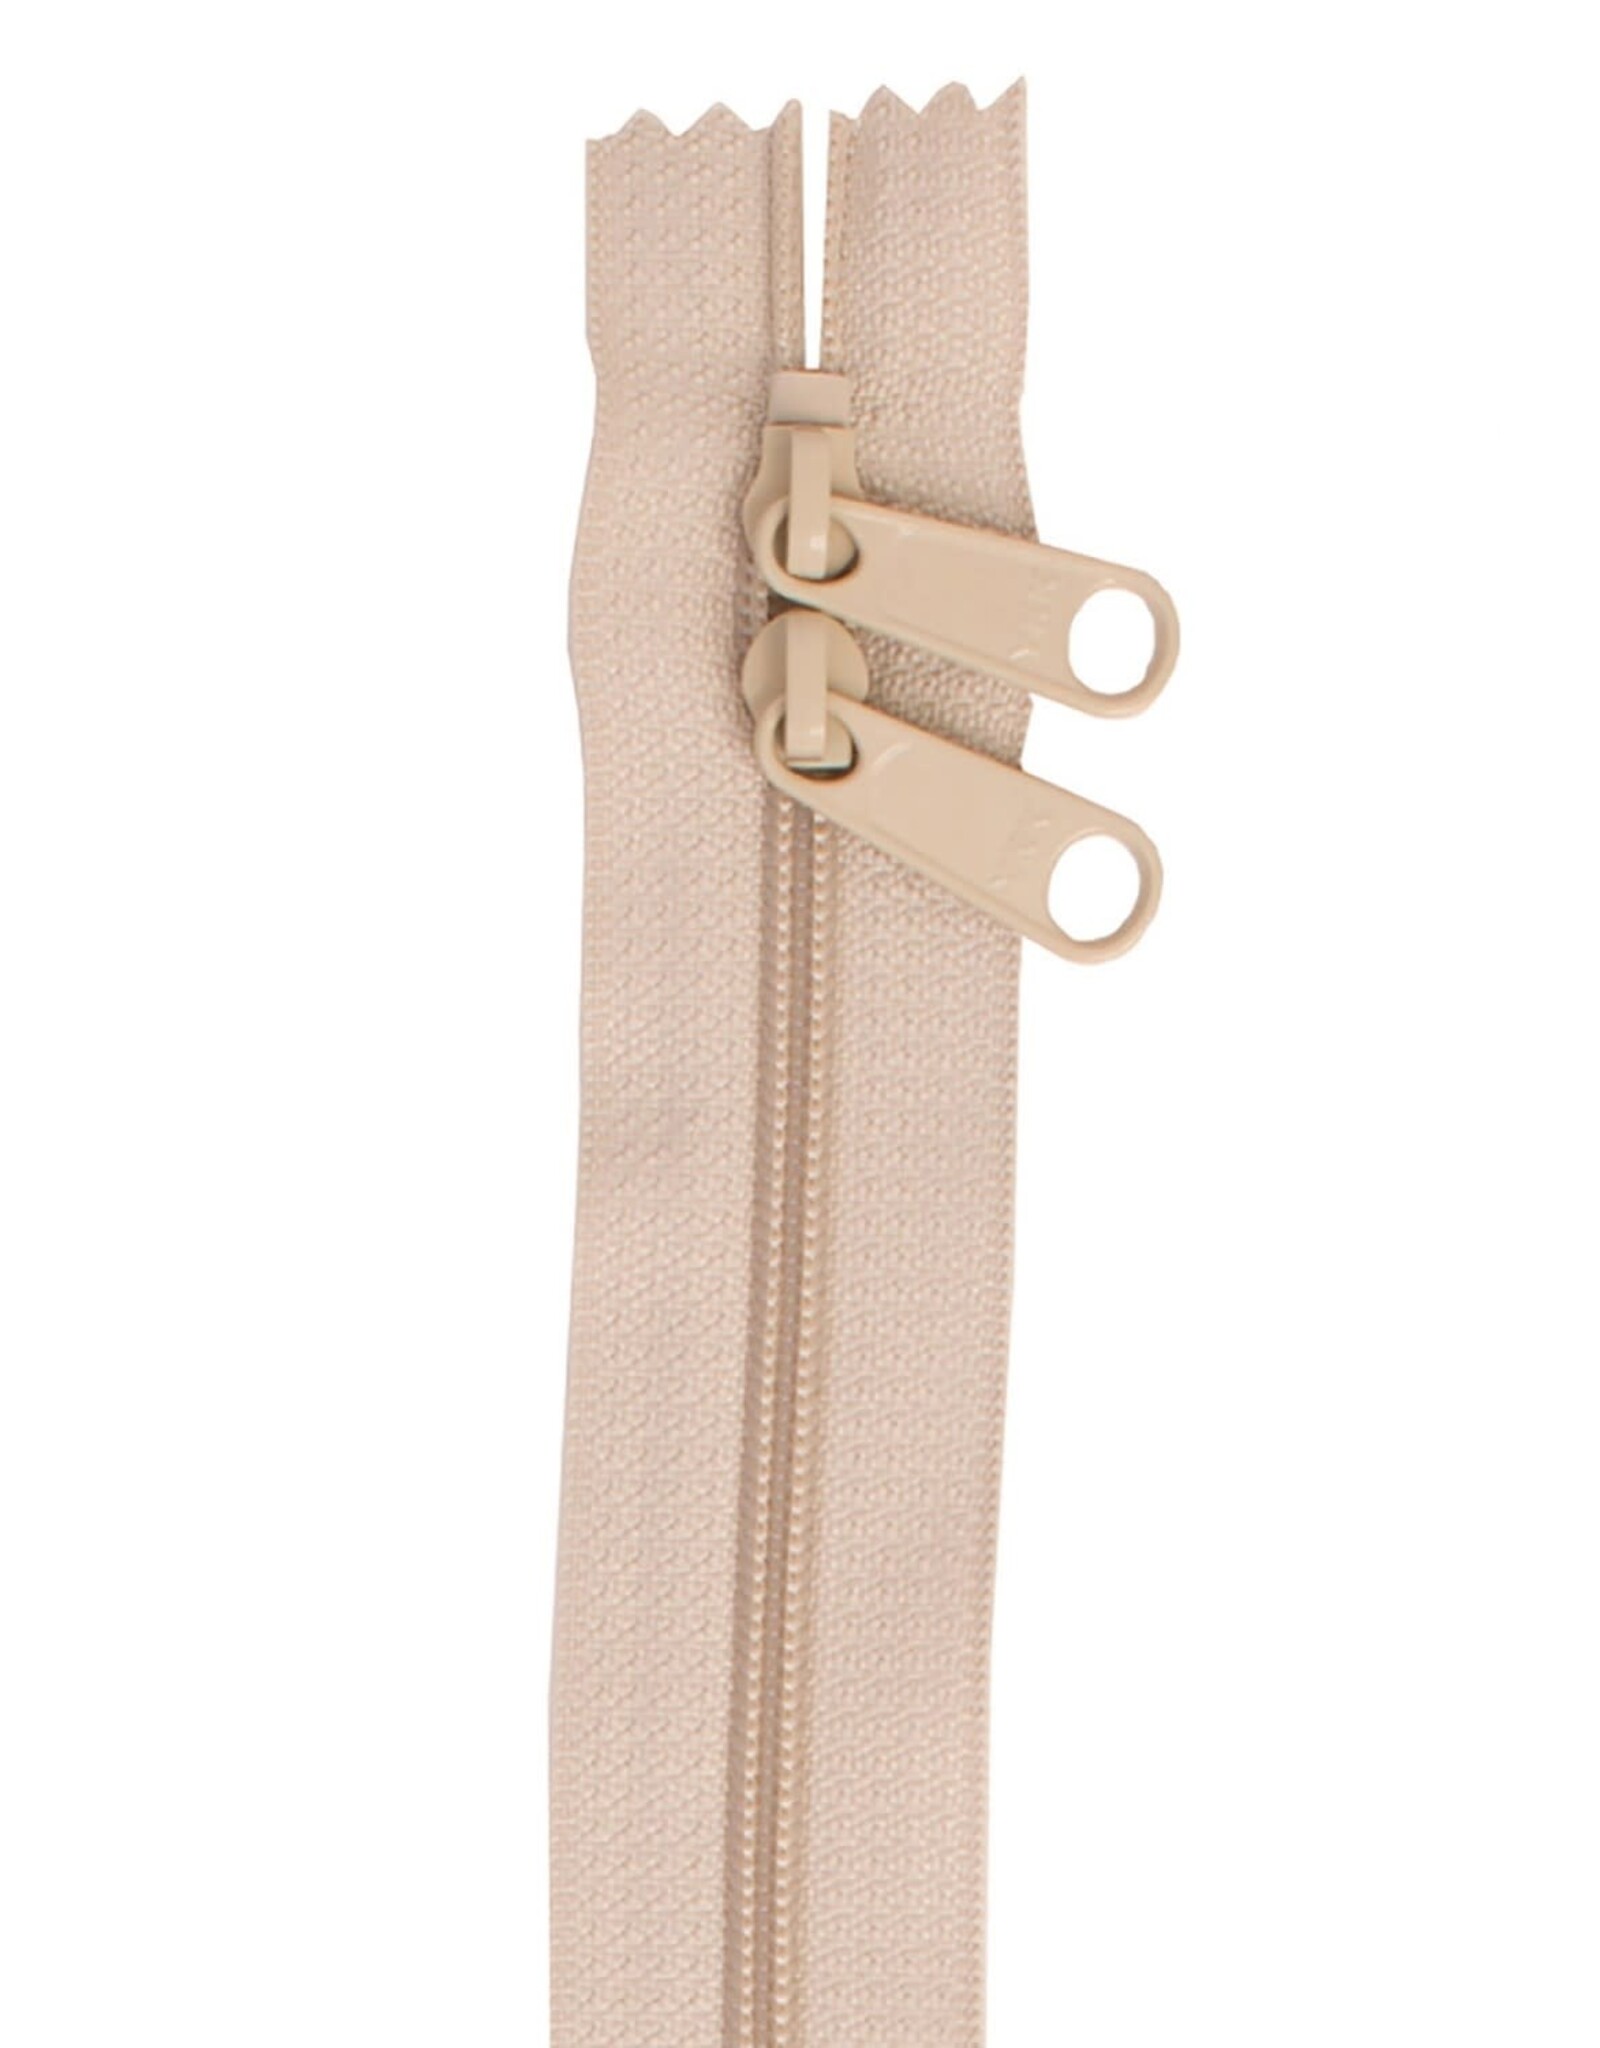 ByAnnie Handbag Zipper - 30 inch / 76 cm - double slide - Natural